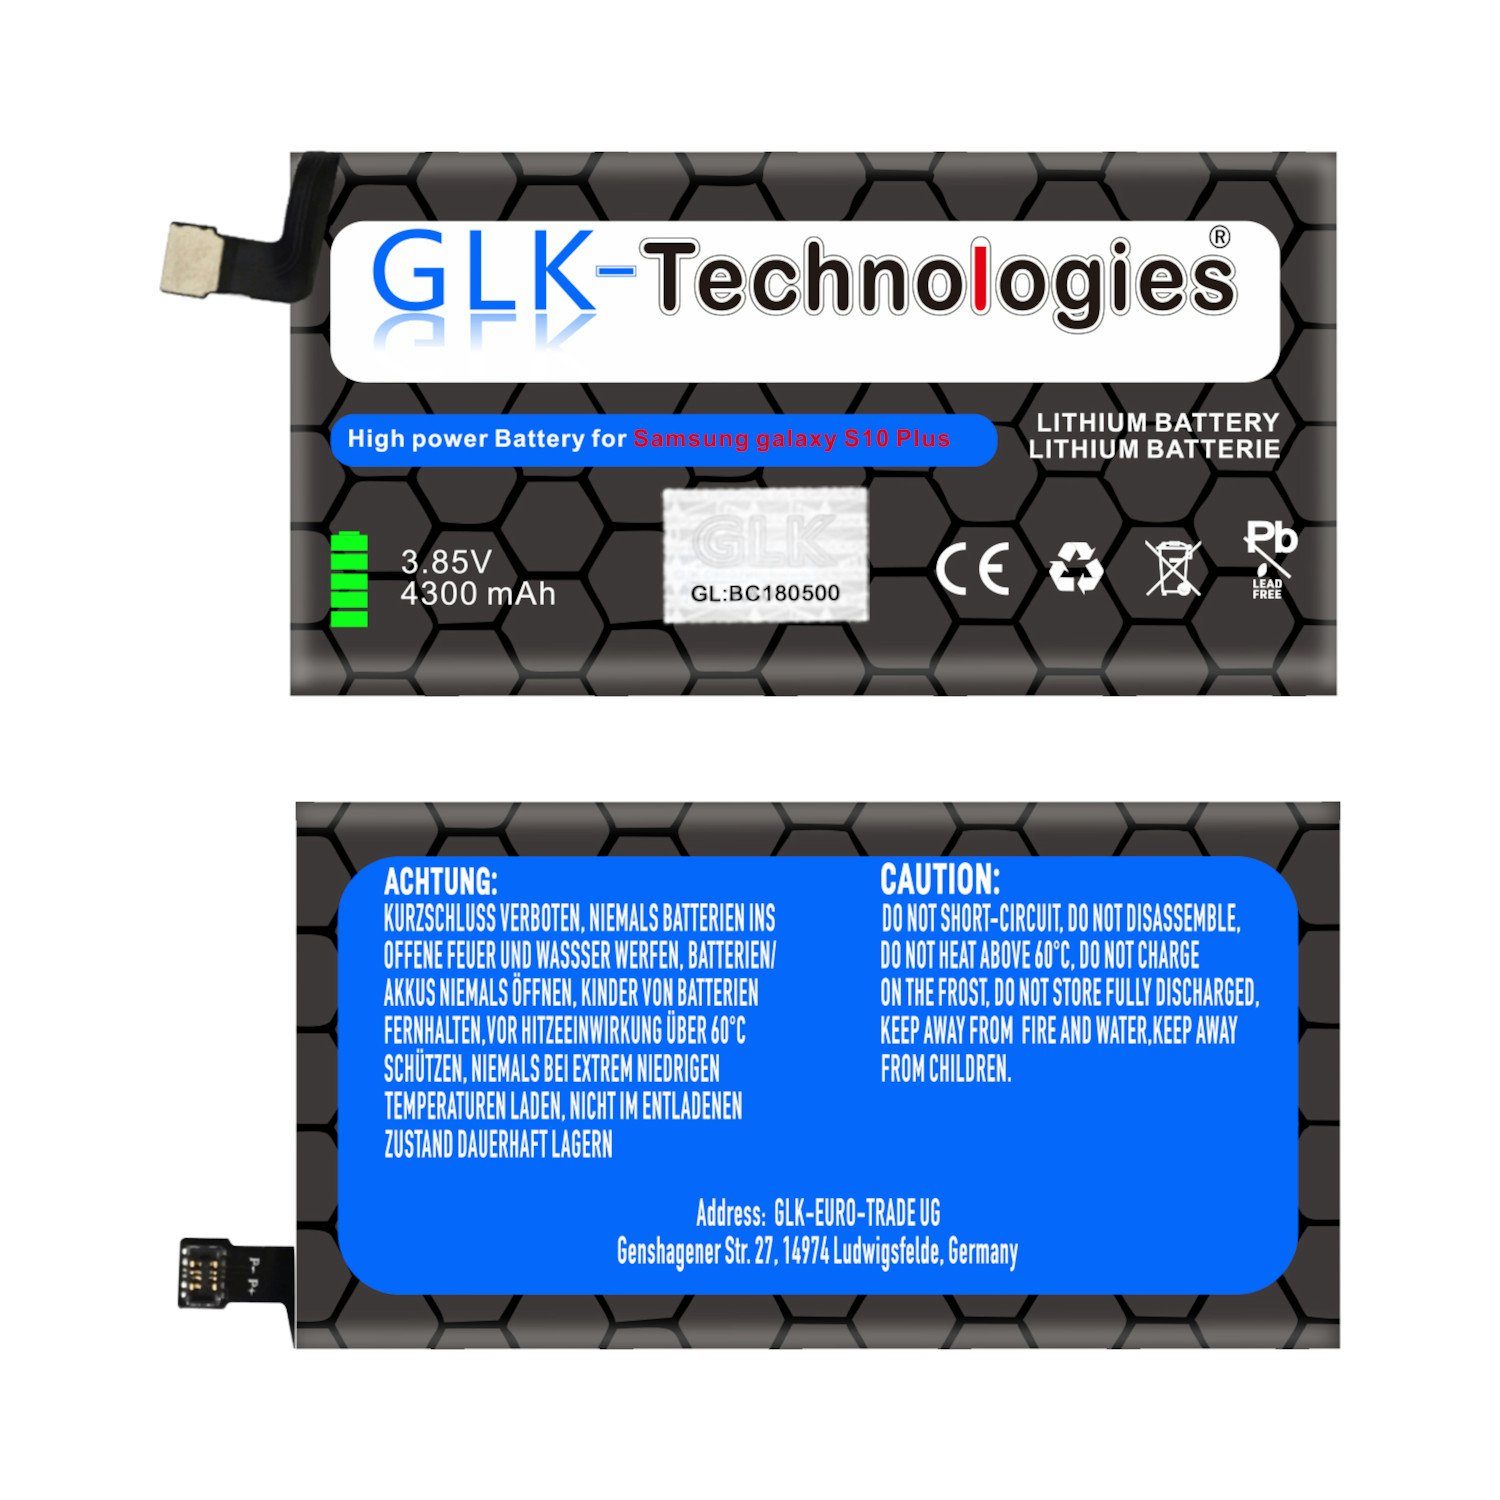 S10 Smartphone-Akku Set High Power Samsung 4450 GLK-Technologies Ohne Plus Galaxy kompatibel Ersatzakku mit mAh S10+